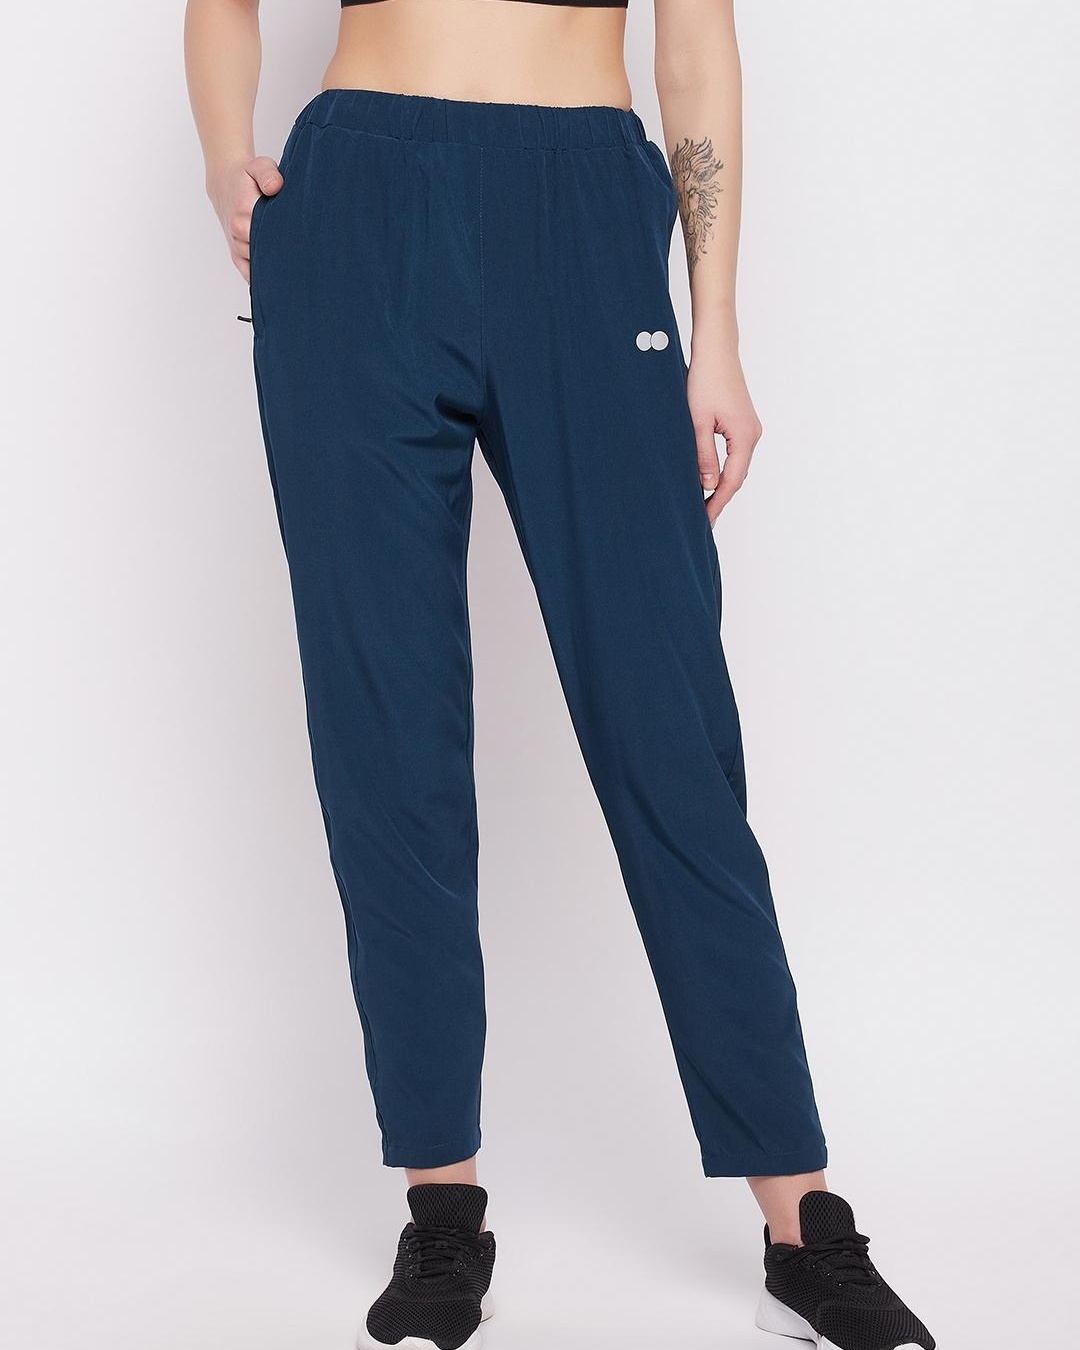 Embossed Wide Leg Track Pants - Navy Blue | Women's Trousers & Yoga Pants |  Sweaty Betty